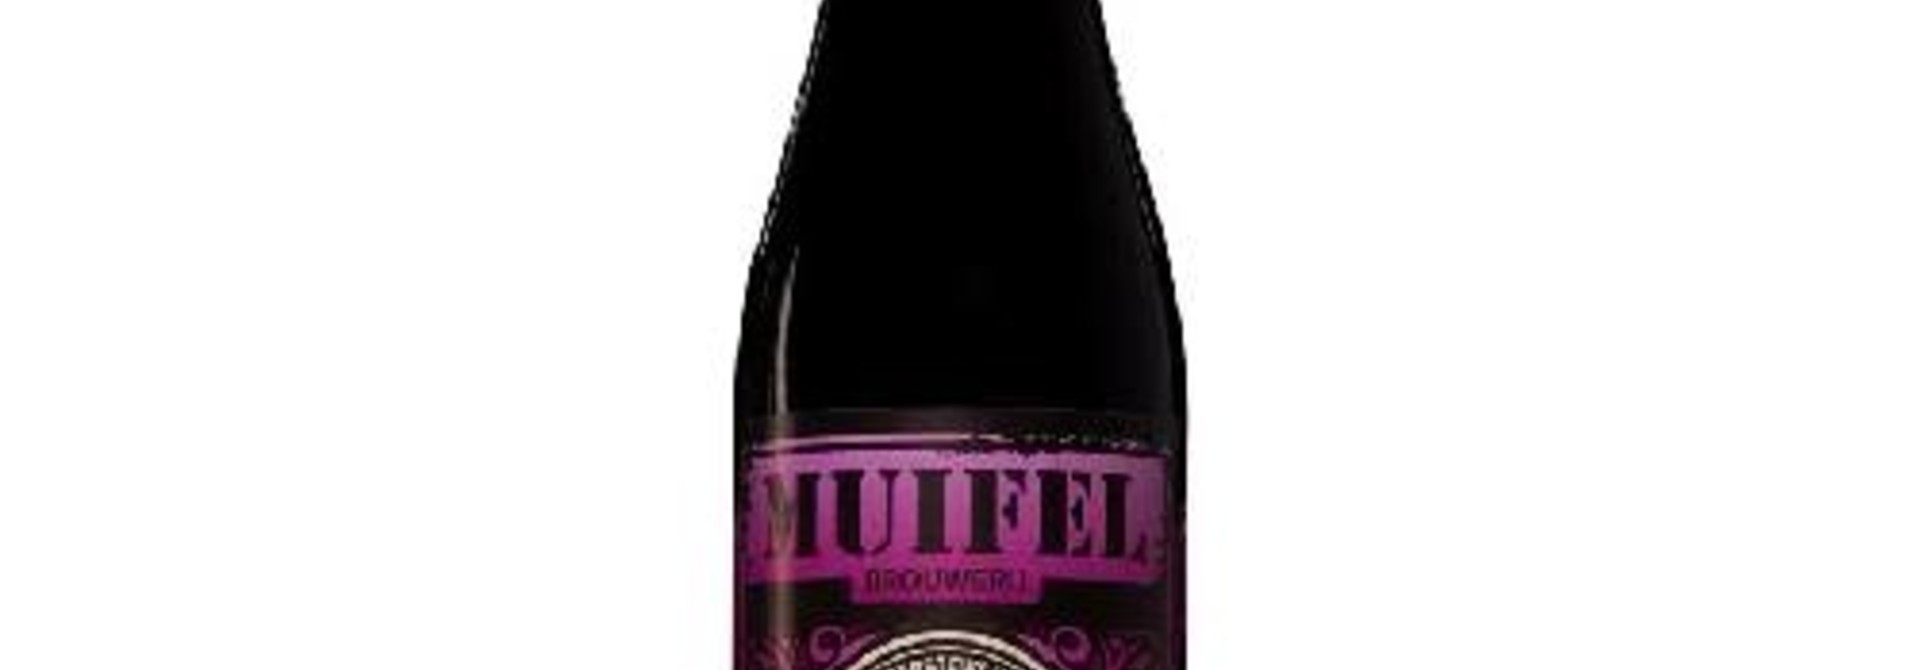 Muifel Barley Wine Special 33cl 12%